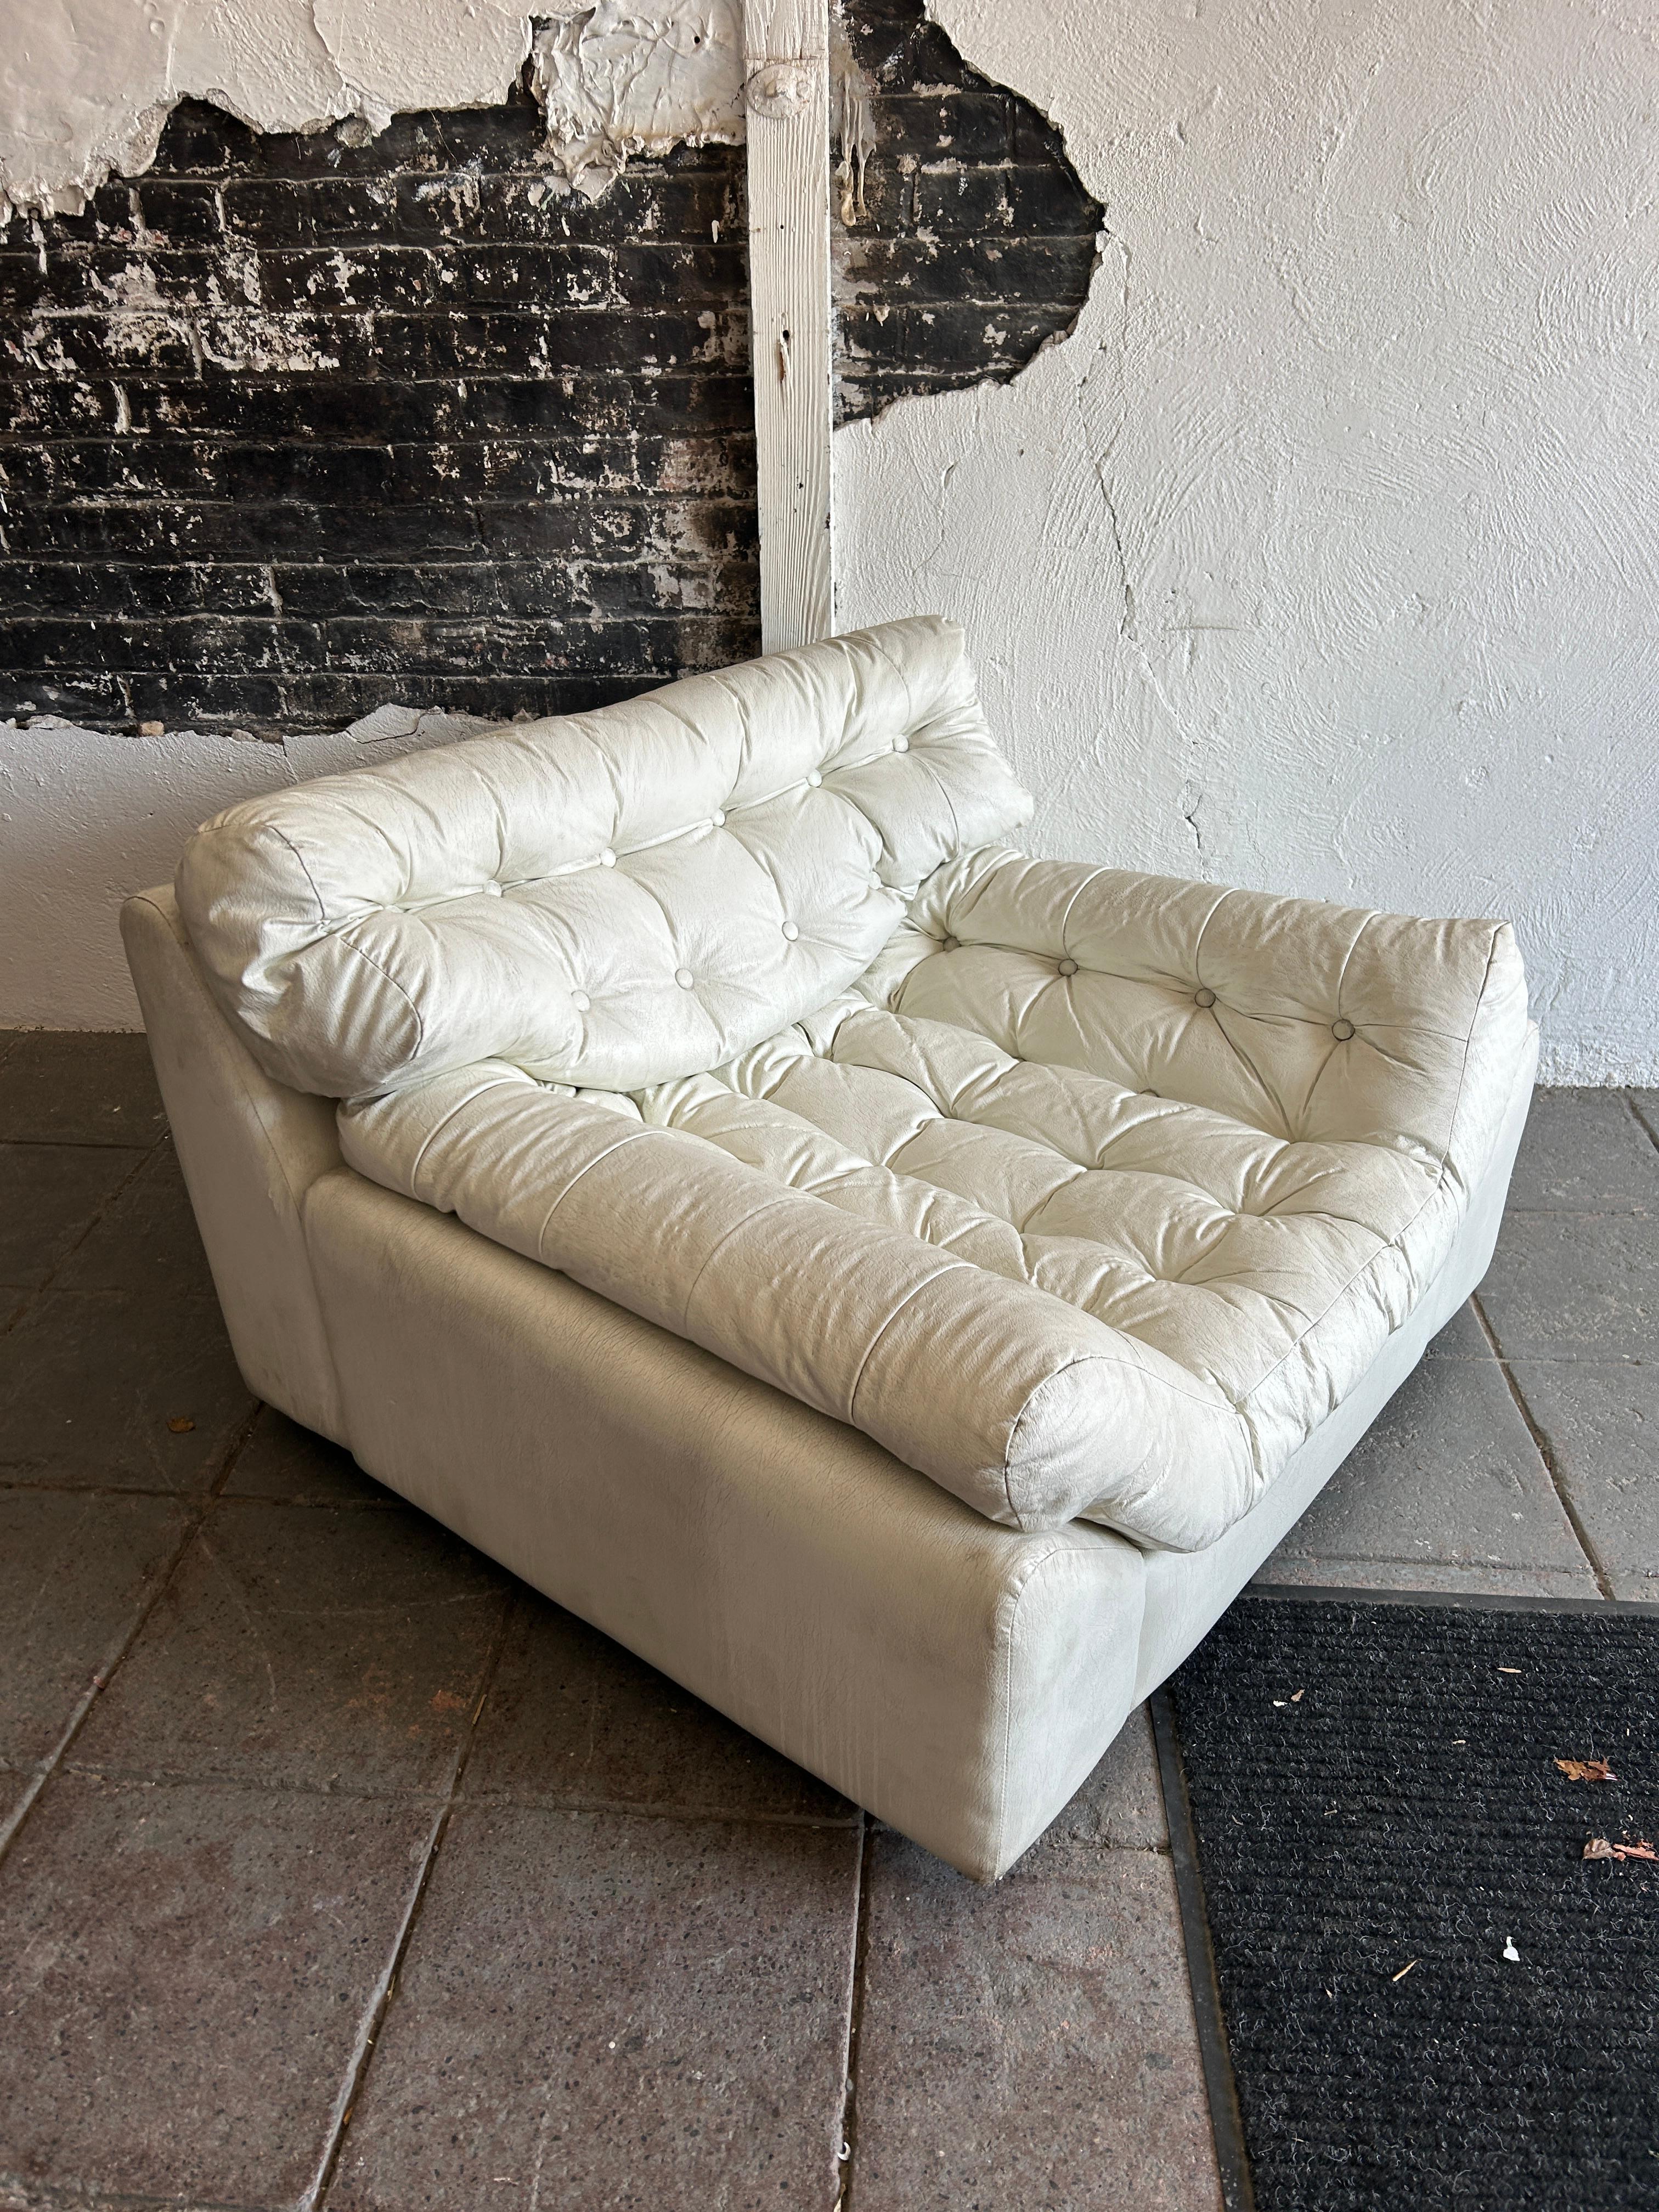 6 piece Swedish Post modern pop art Low sectional sofa by lennart bender 2